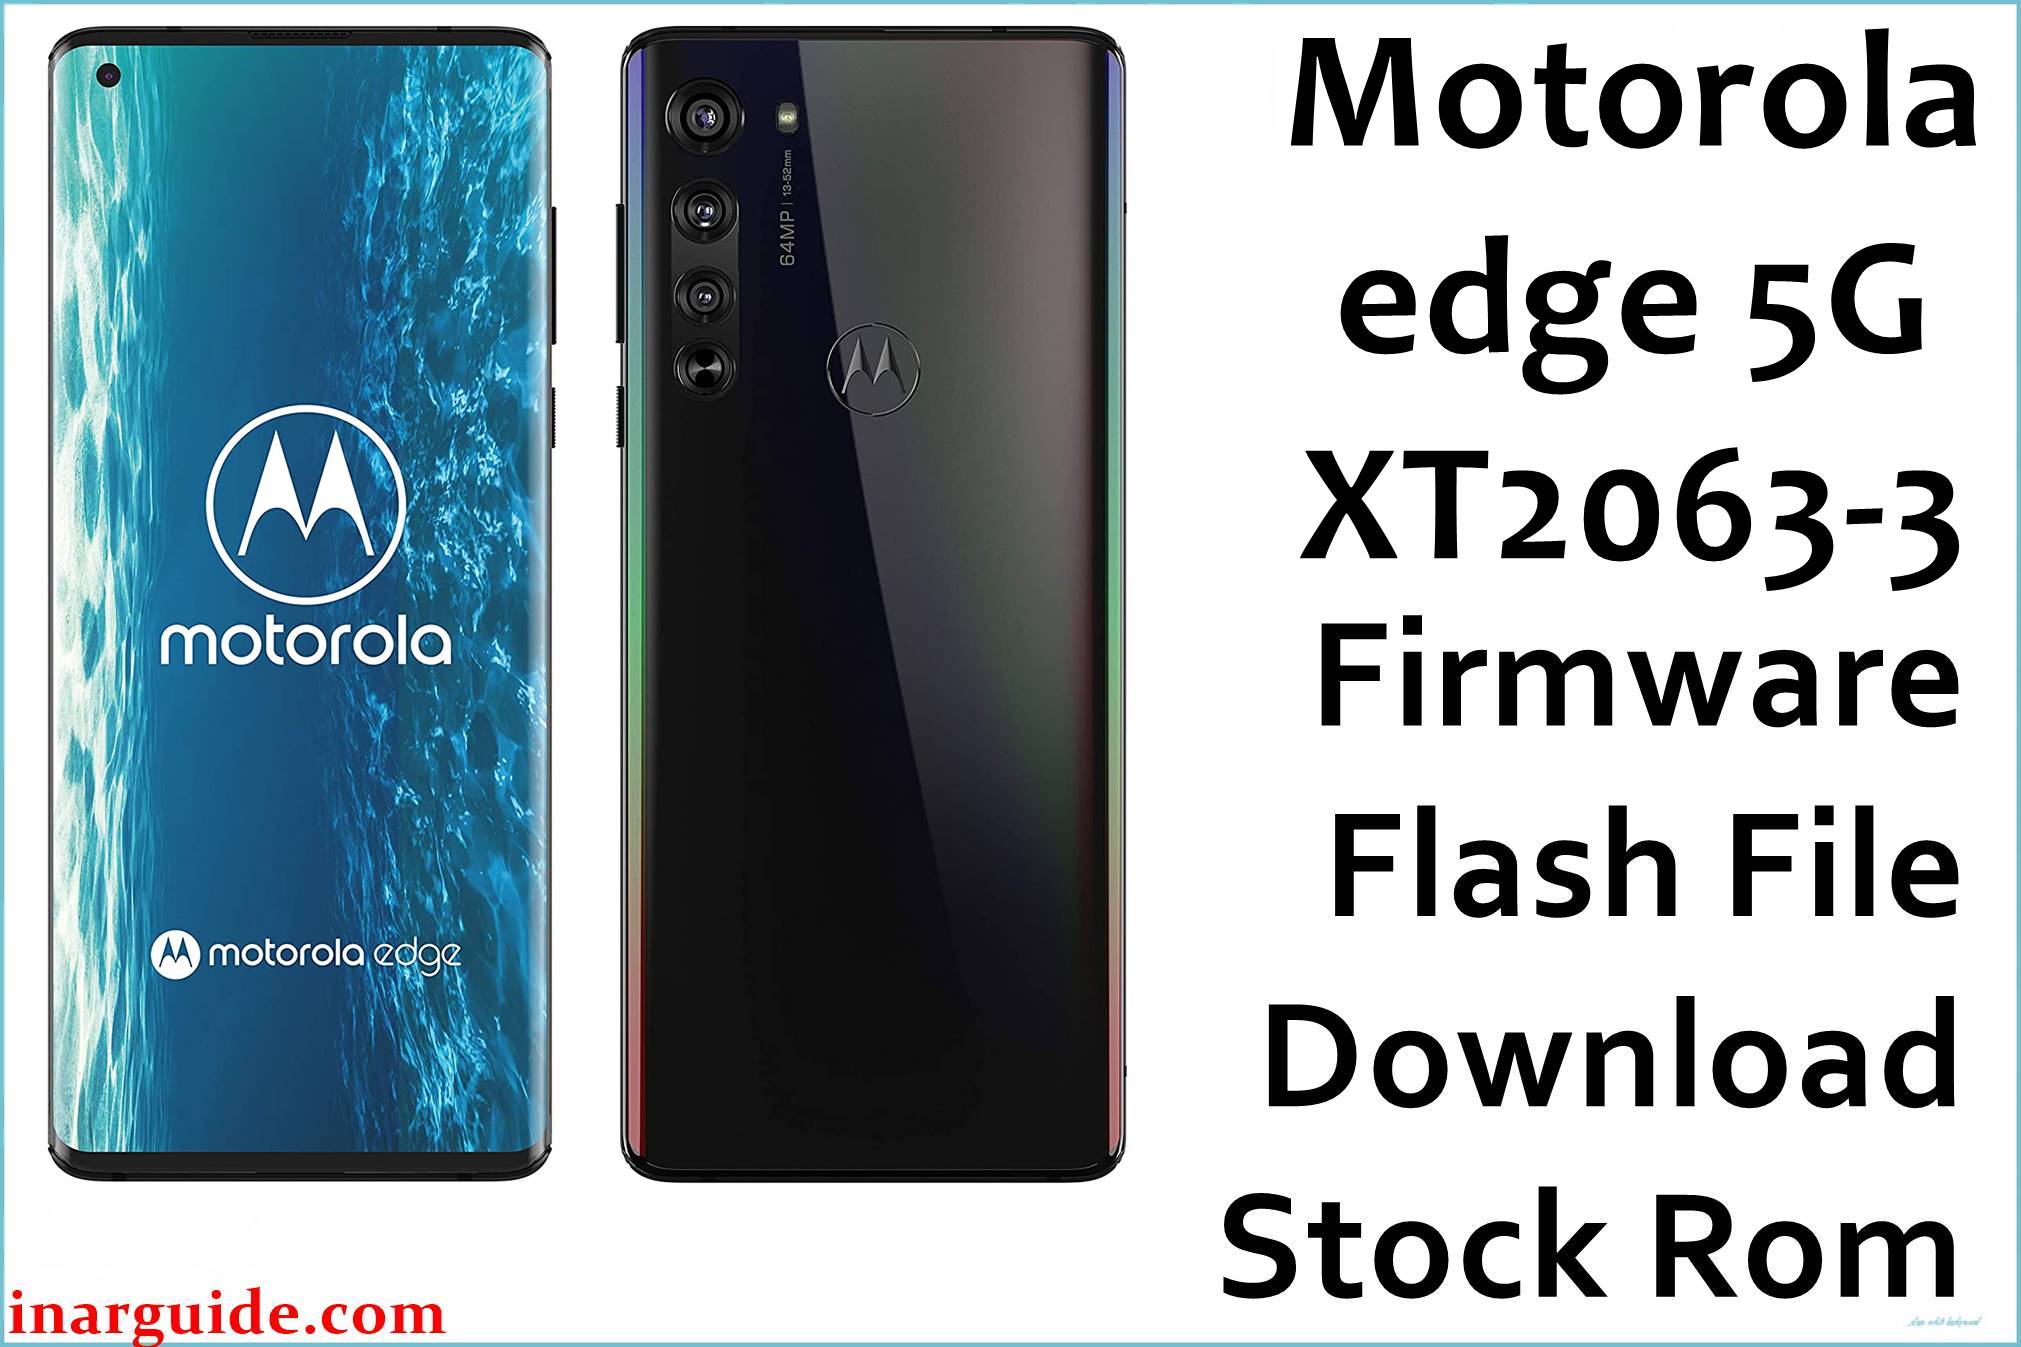 Motorola edge 5G XT2063-3